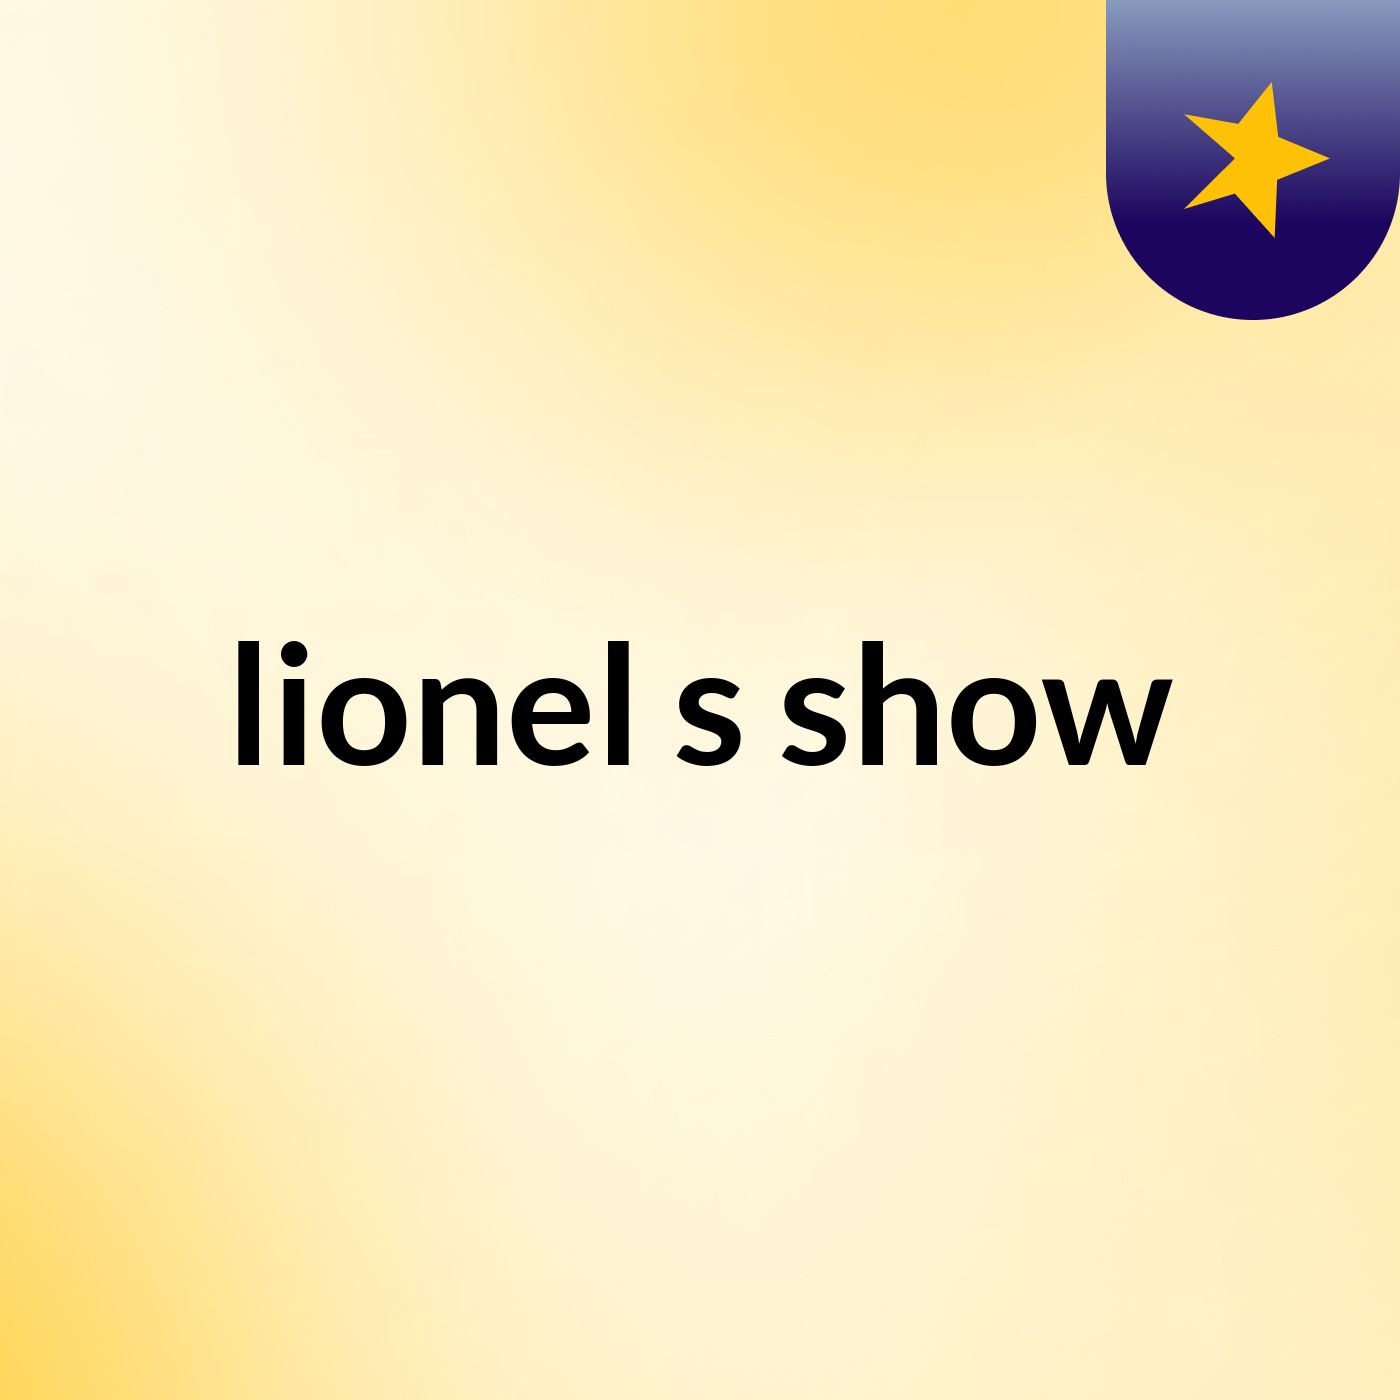 lionel's show